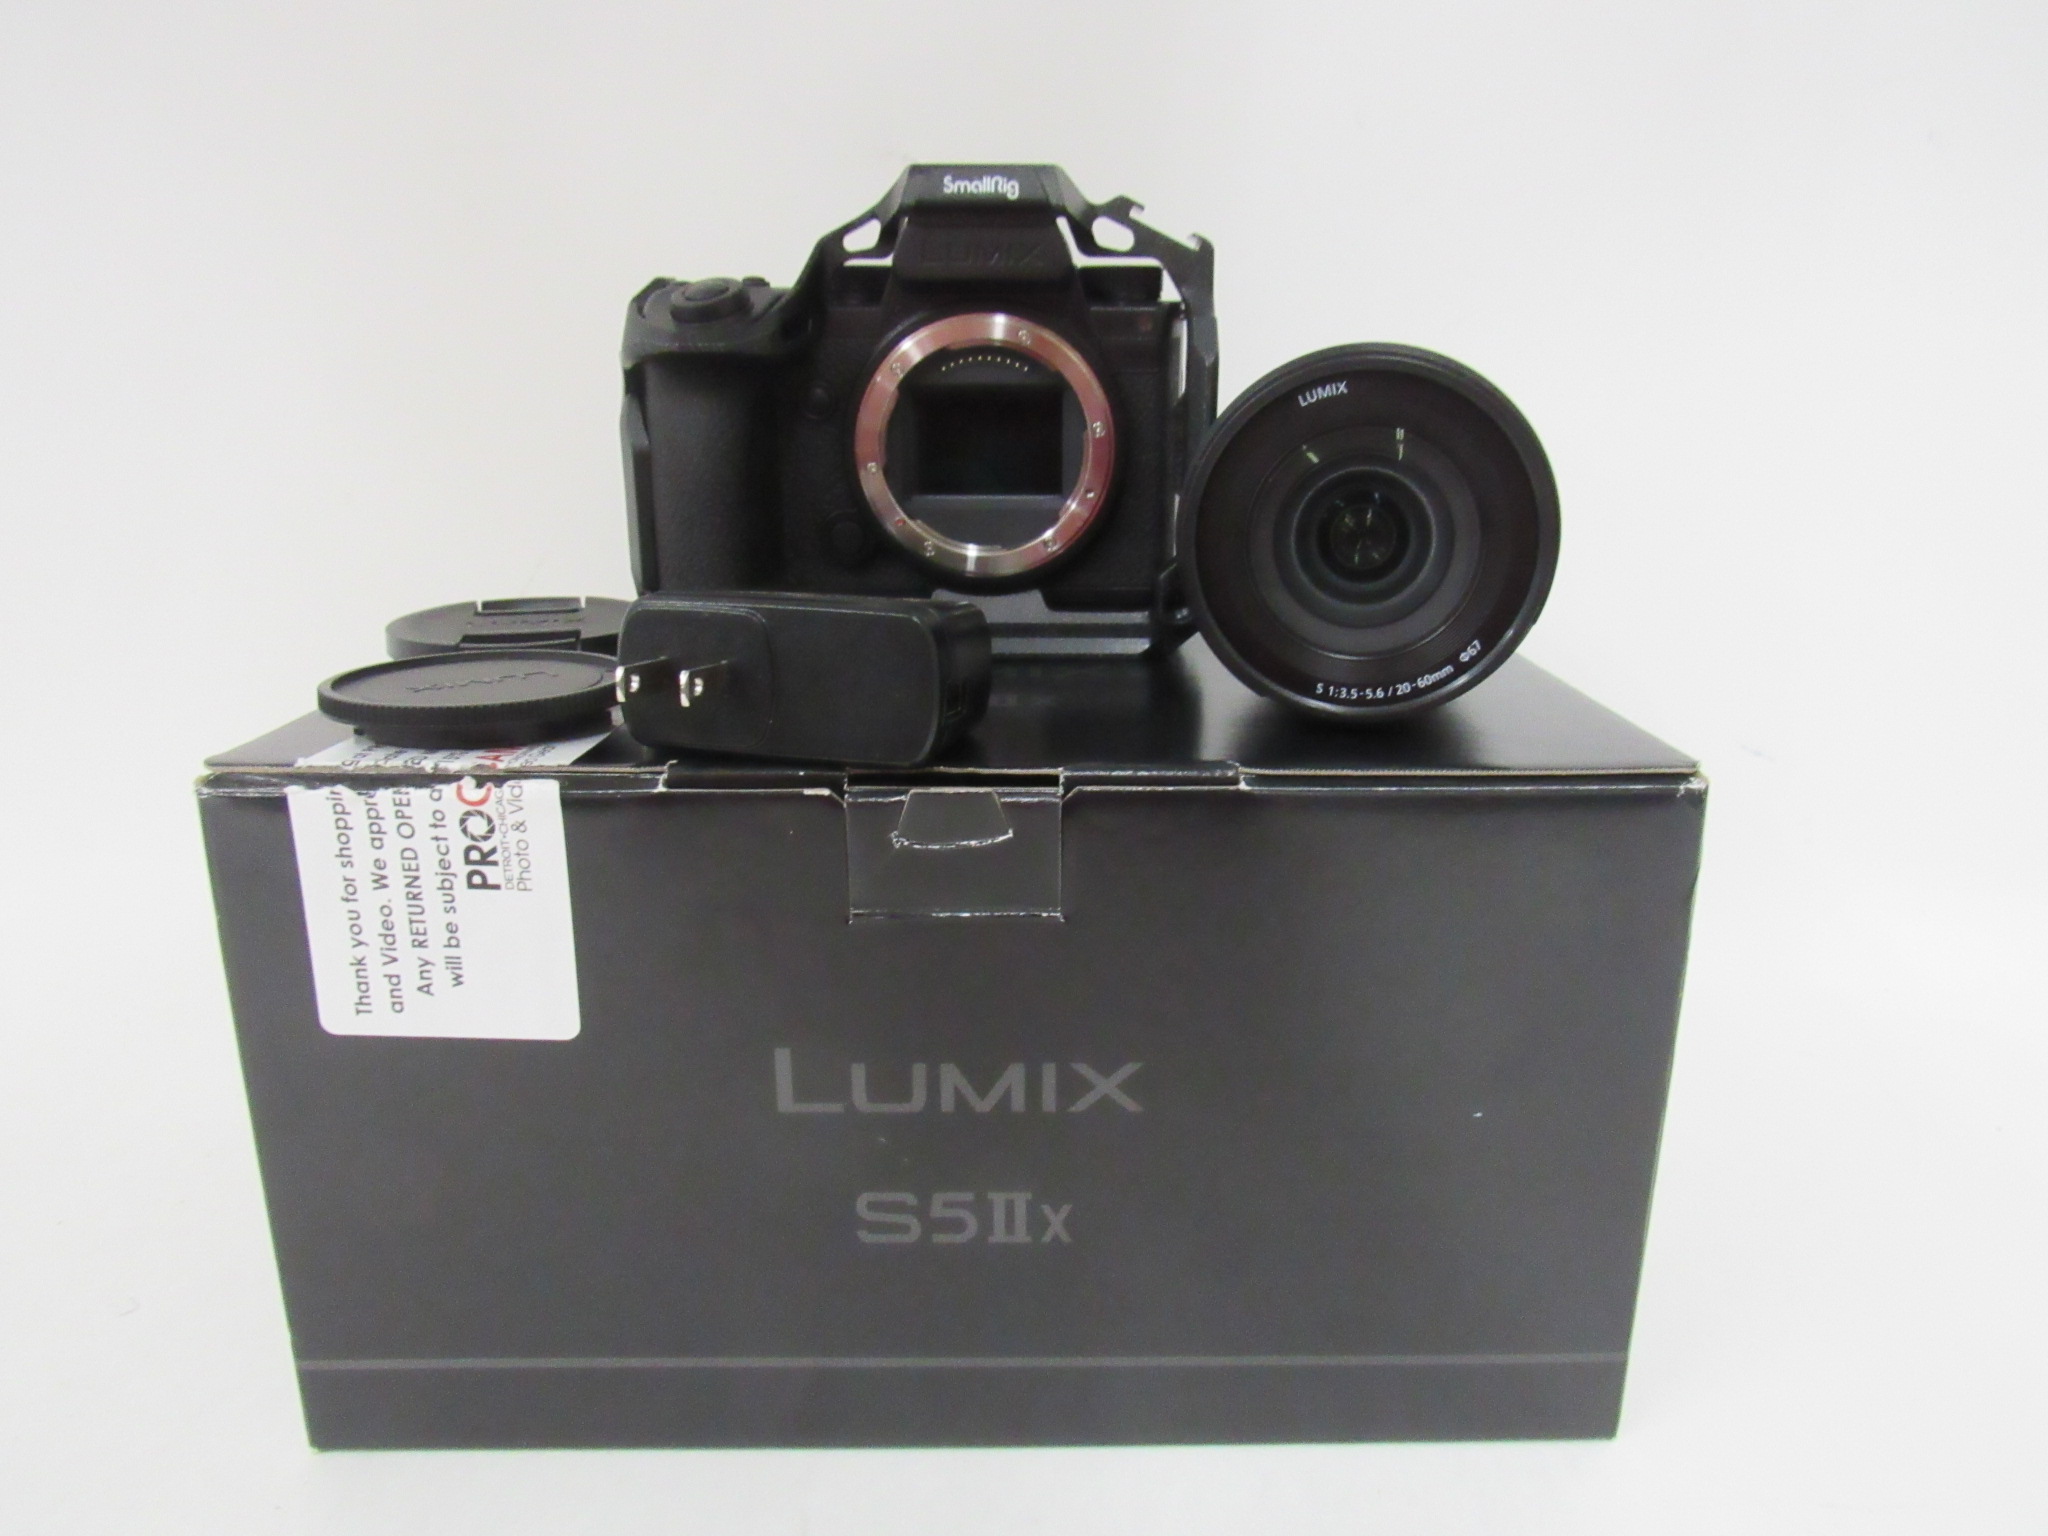 DC-S5M2XK パナソニック LUMIX S5IIX ミラーレス一眼カメラ ブラック